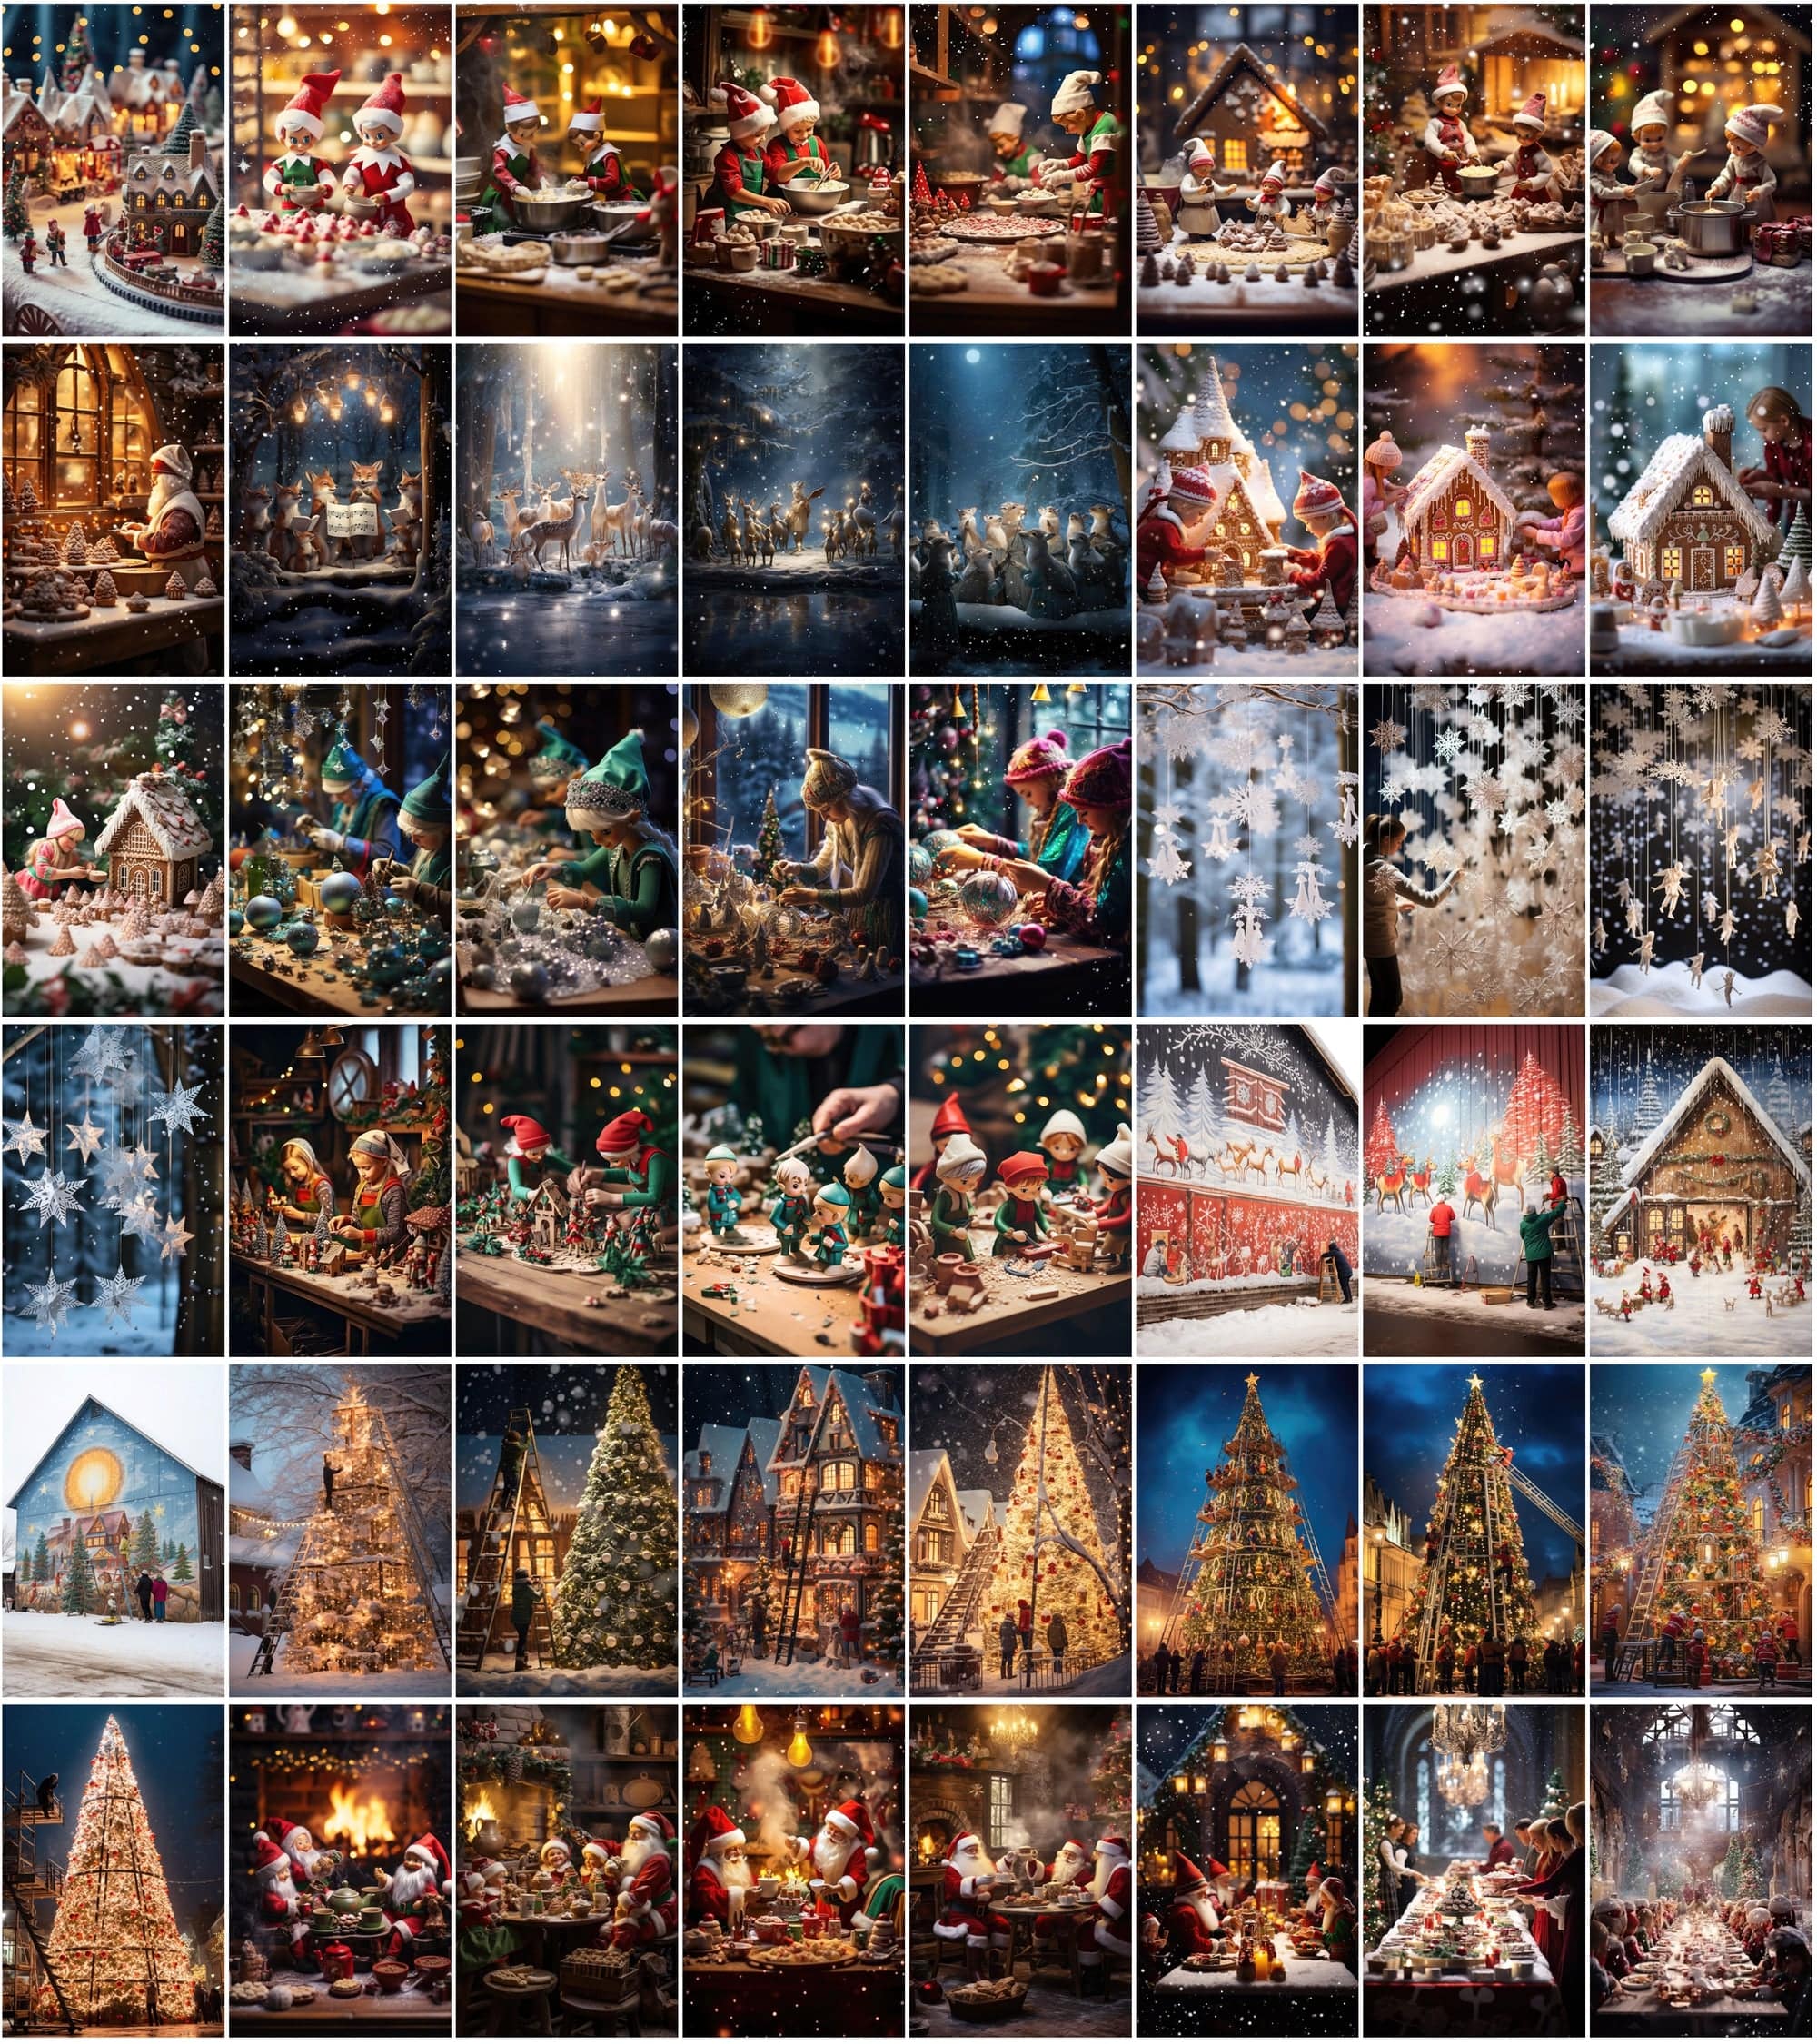 Enchanting Winter Photo & Illustration Collection - High-Resolution, Colorful, and Versatile Digital Download Sumobundle